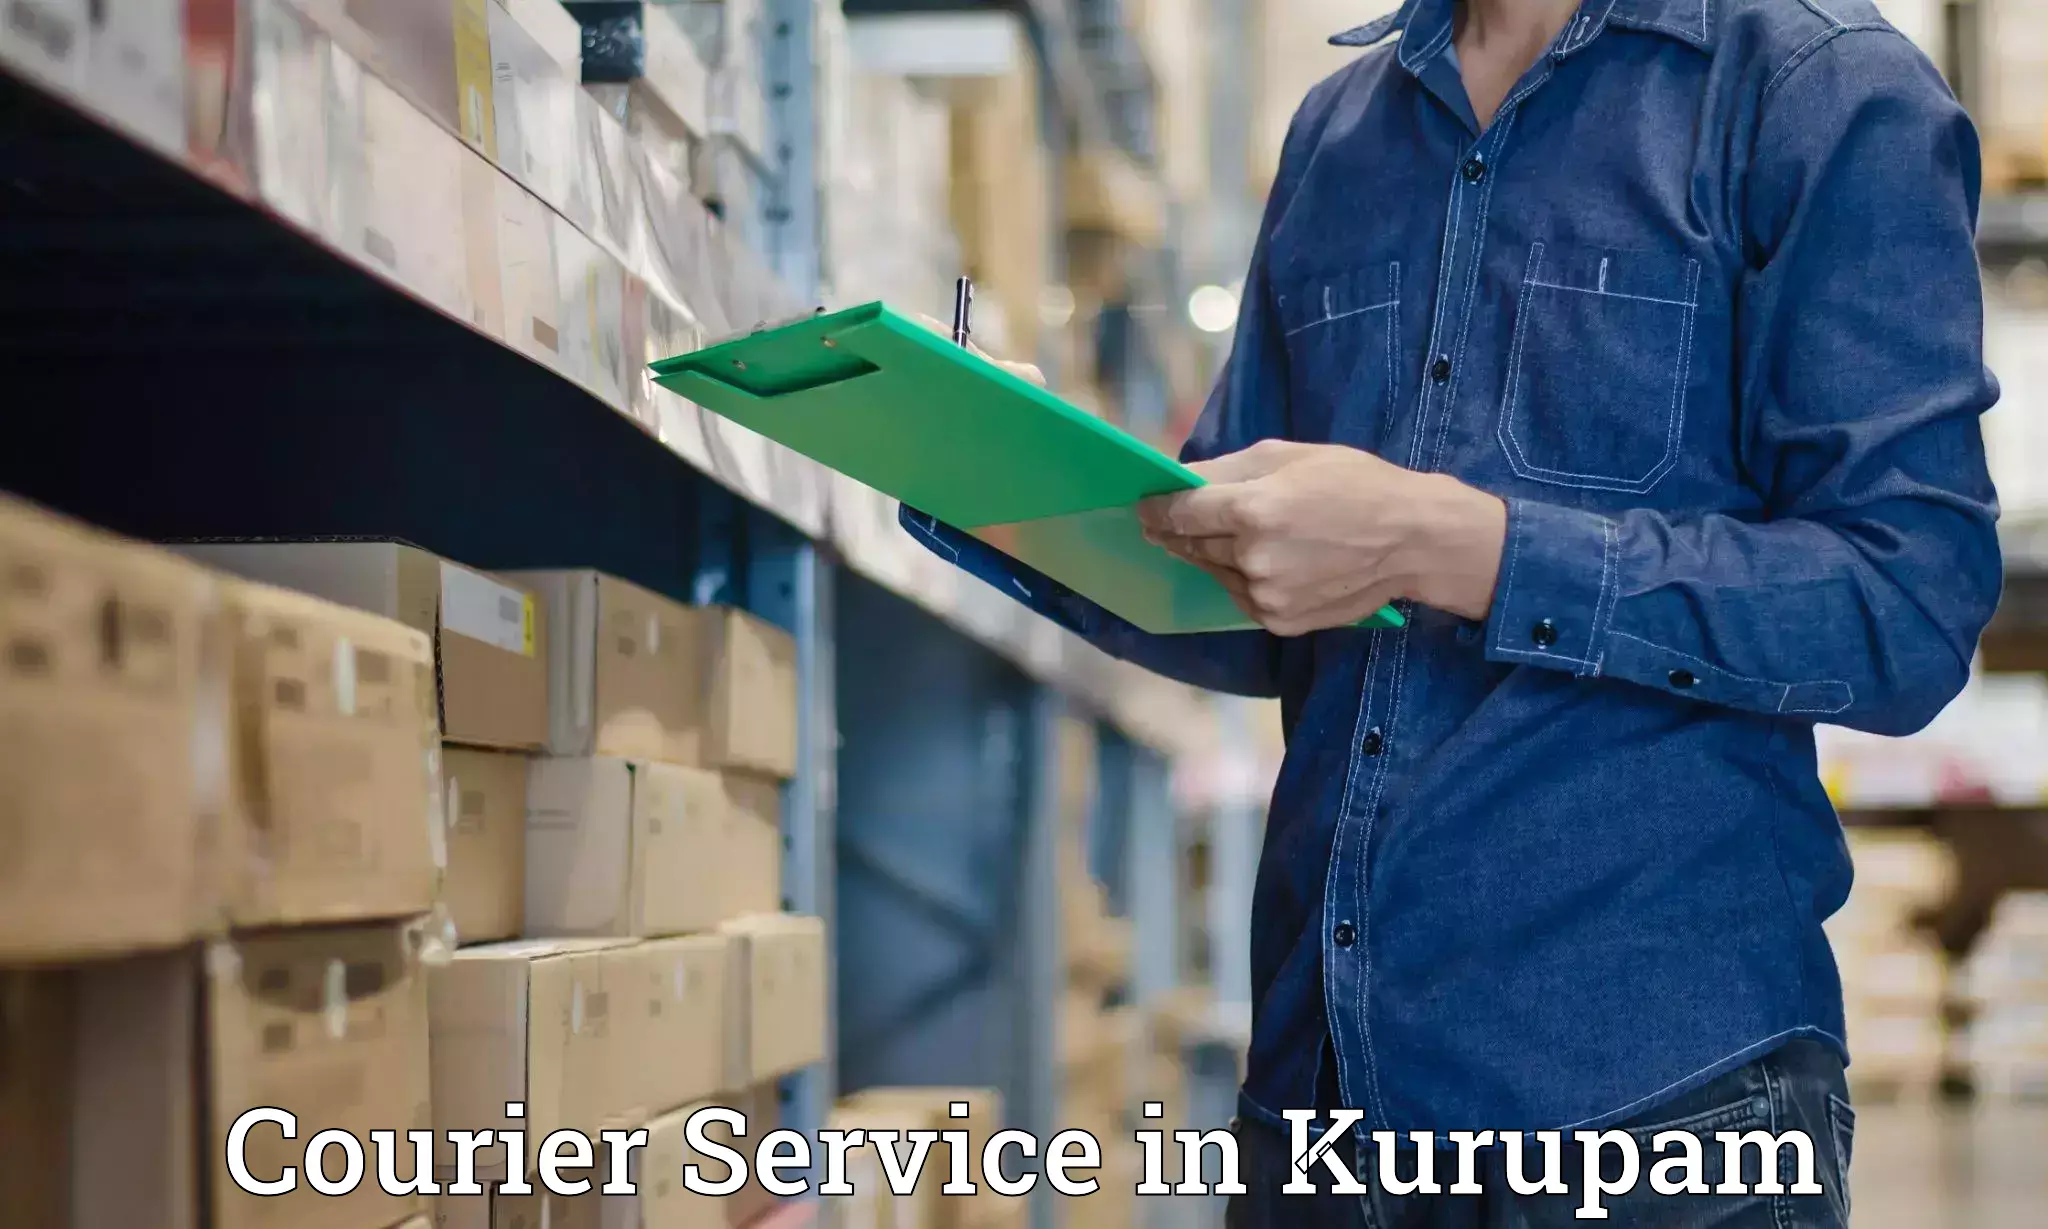 Specialized shipment handling in Kurupam